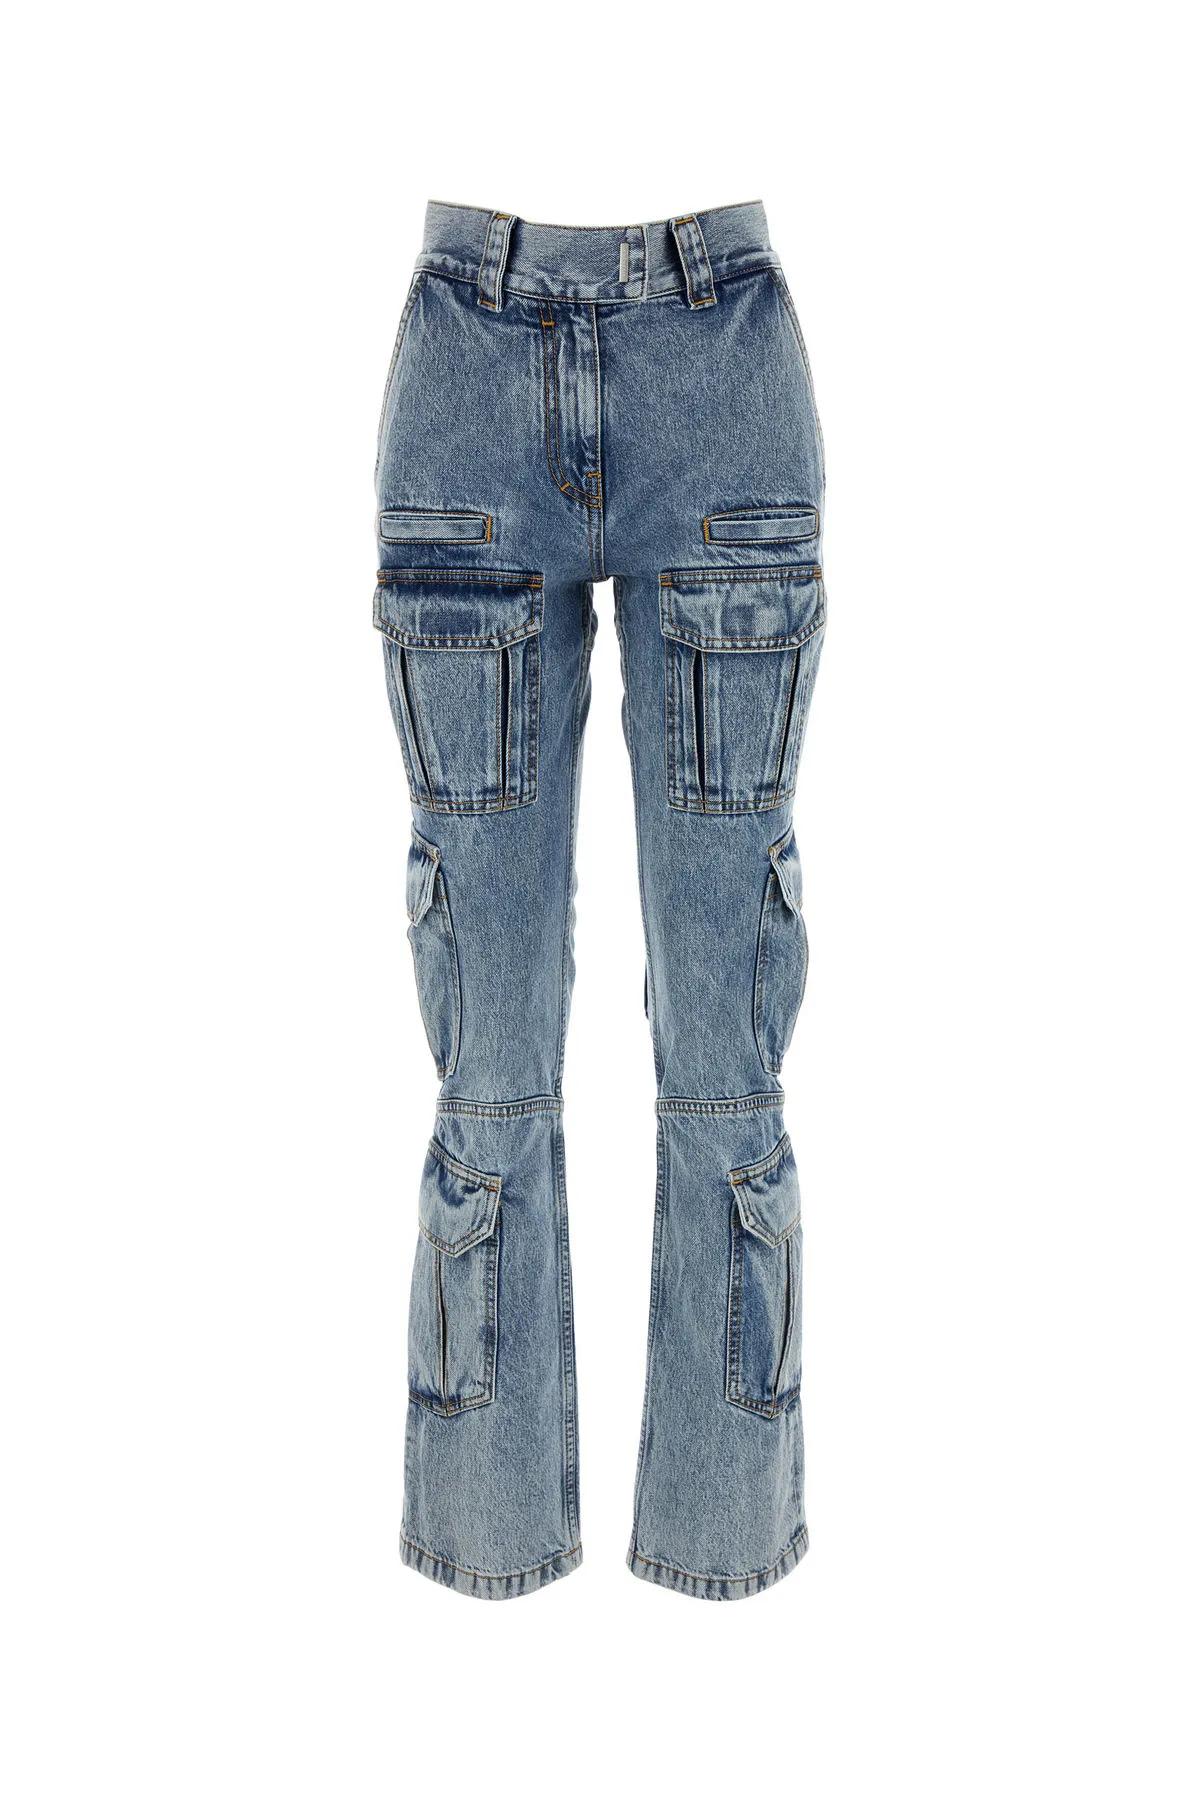 Givenchy Denim Cargo Jeans